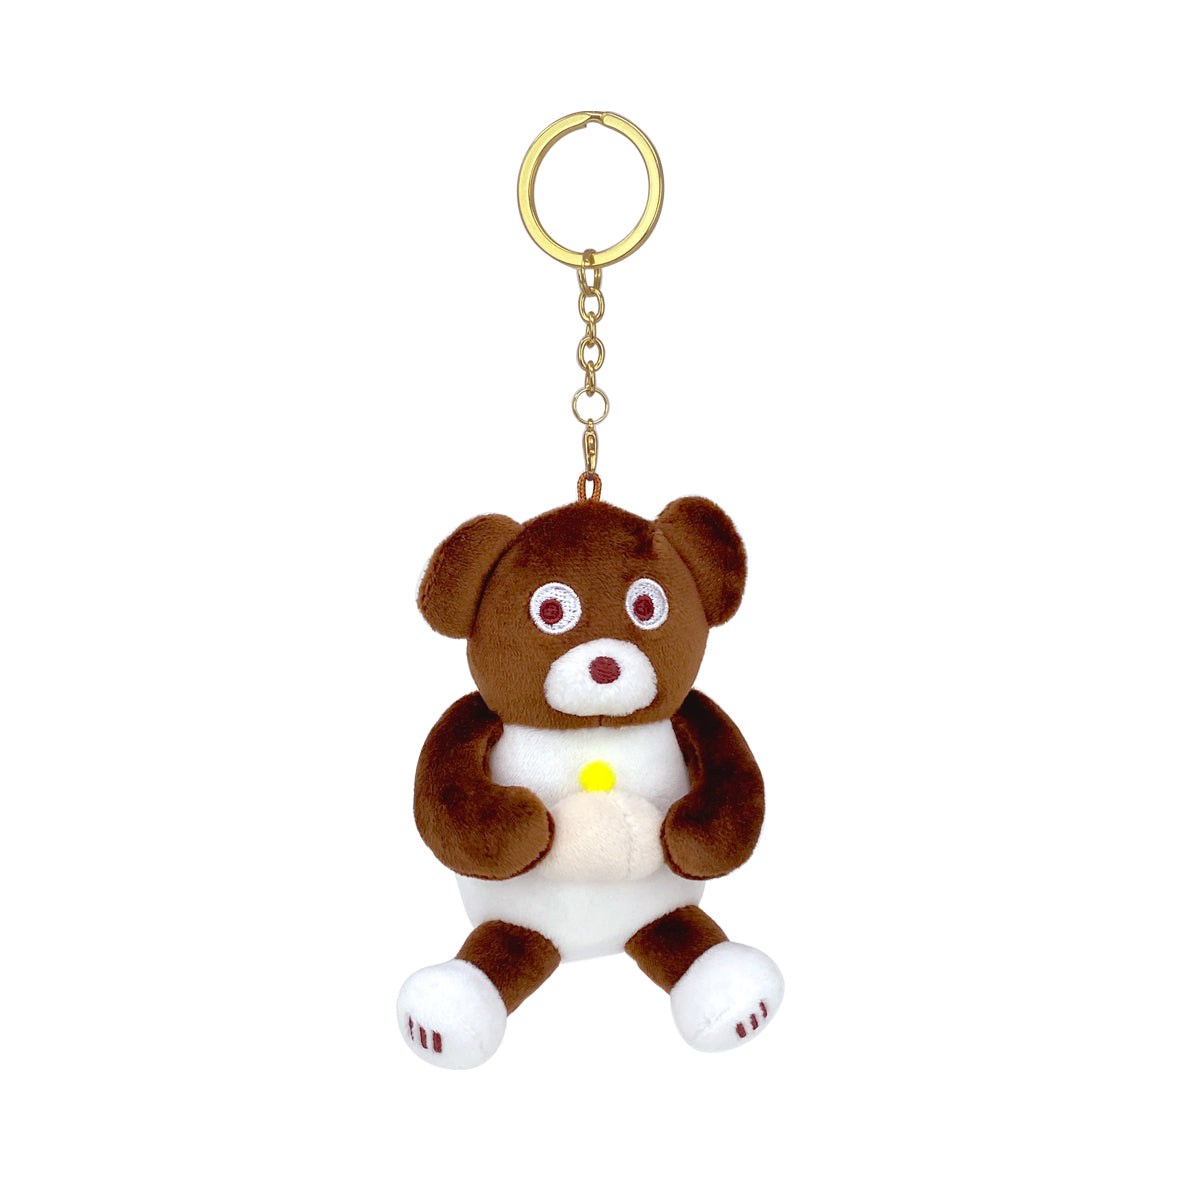 Cafe Bonbon Kuma-chan stuffed toy key chain